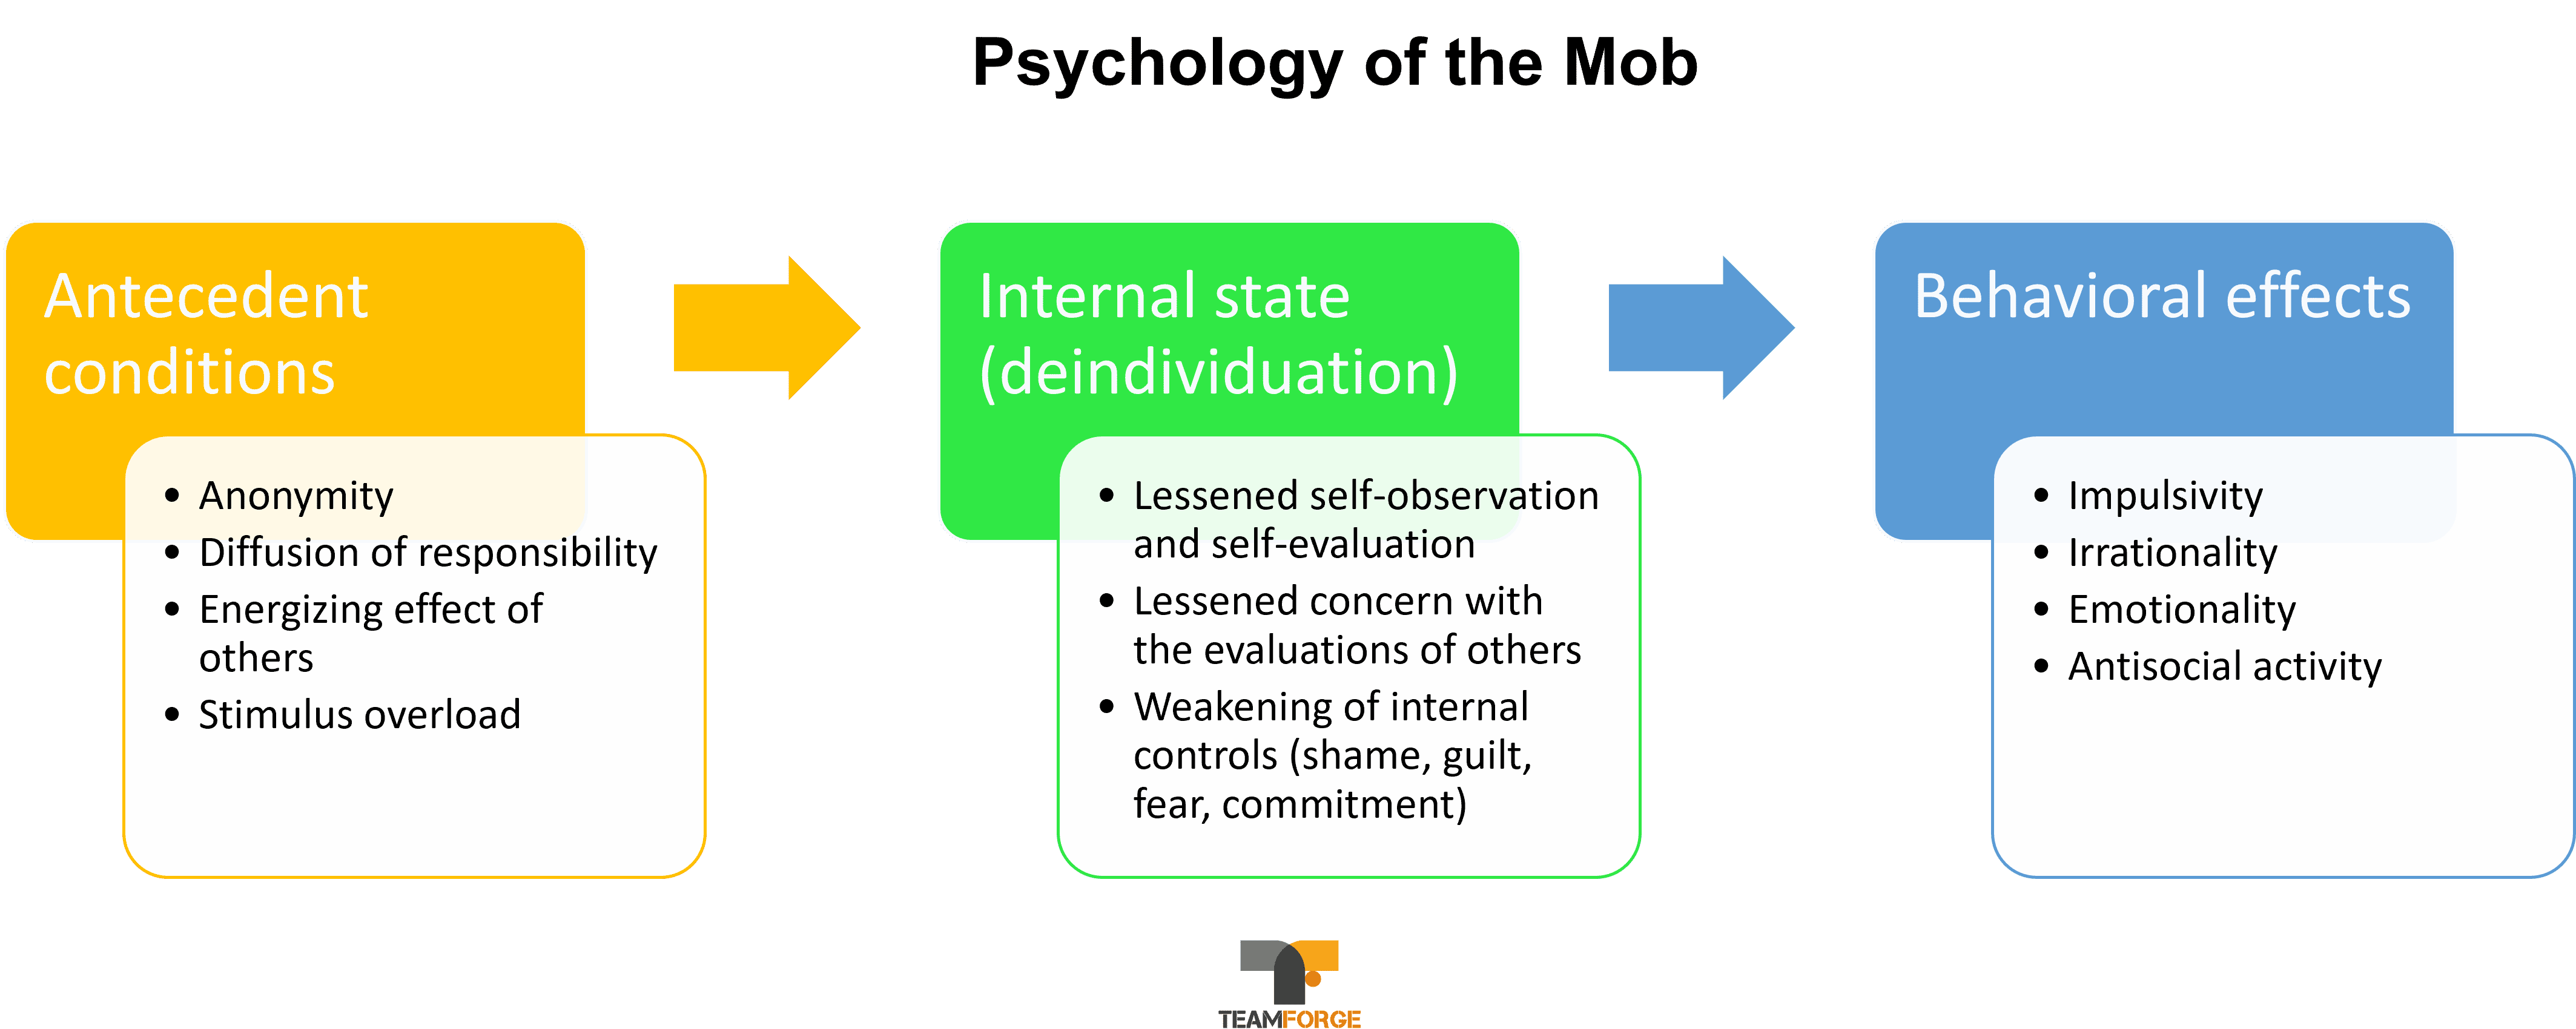 Psychology of the Mob: Theoratical Model of Deindividuation - Philip Zimbardo